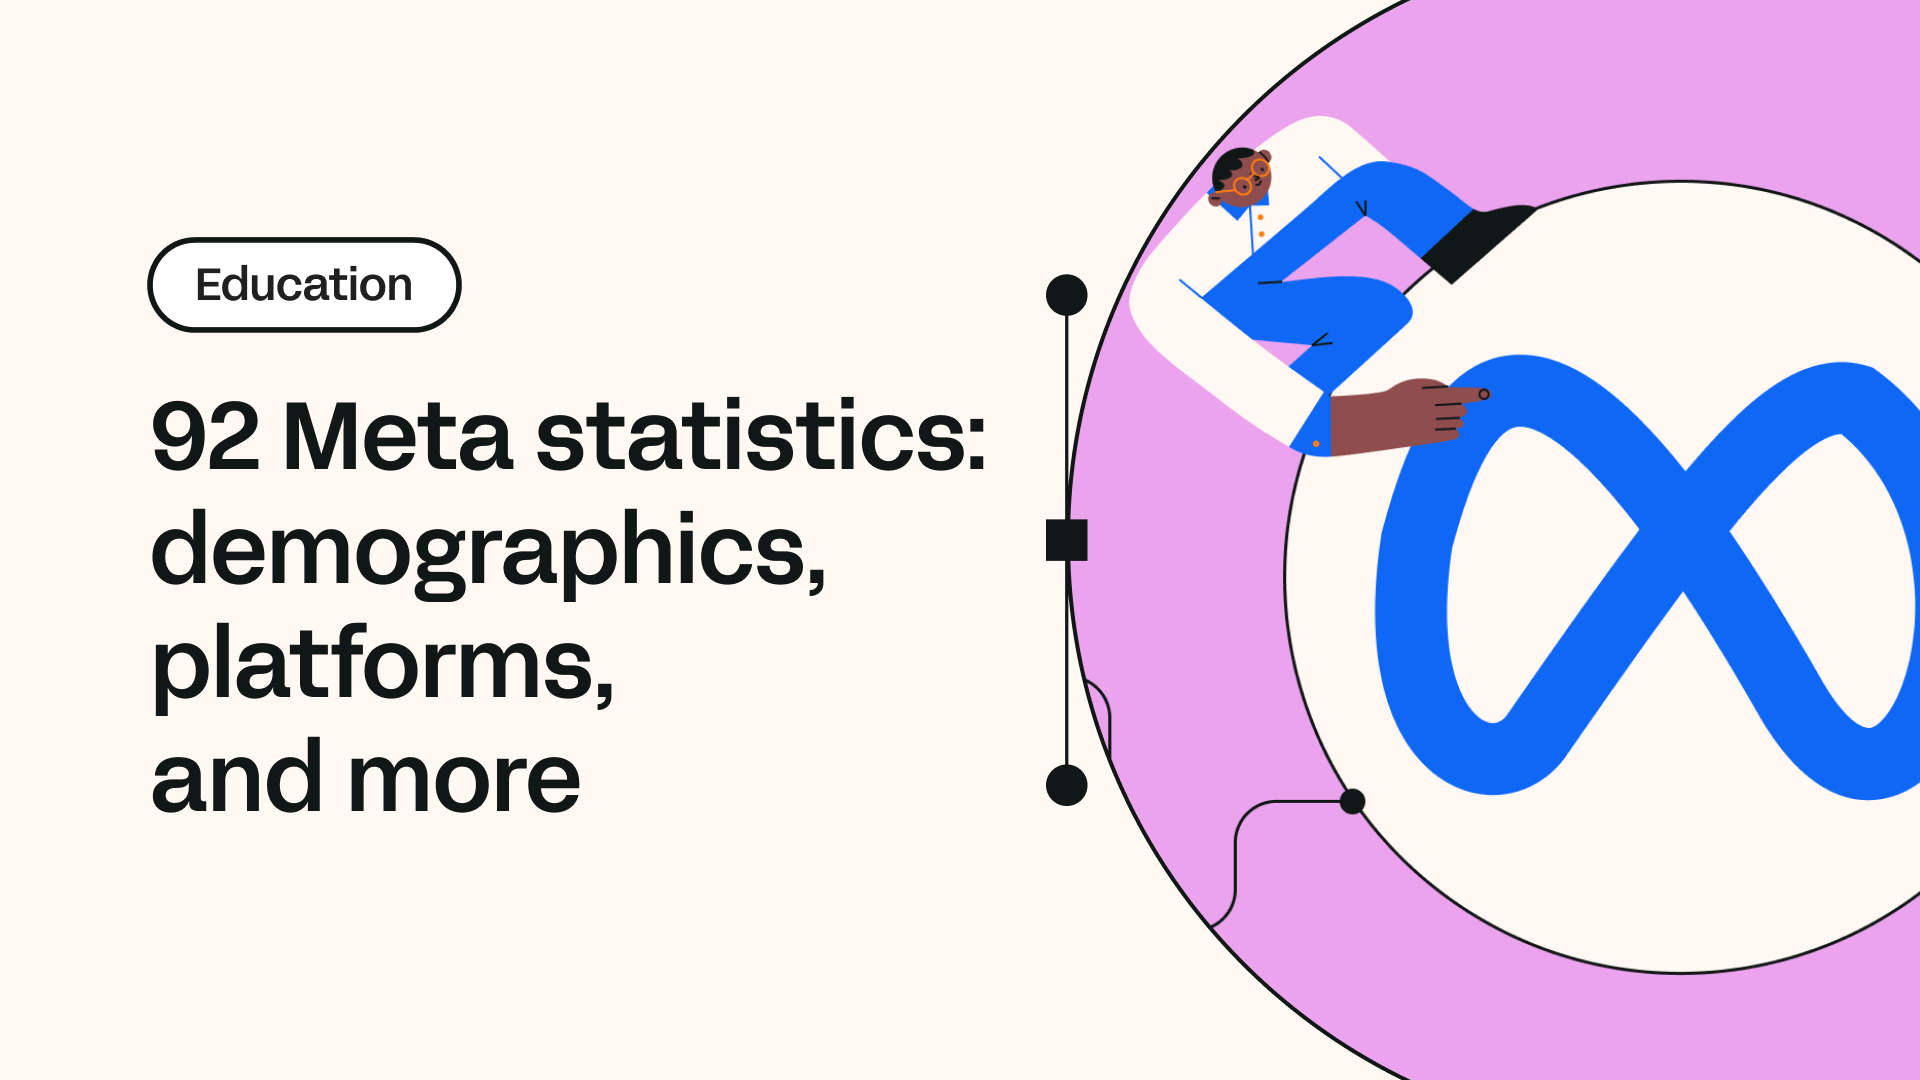 92 Meta statistics: user demographics, platforms, and more